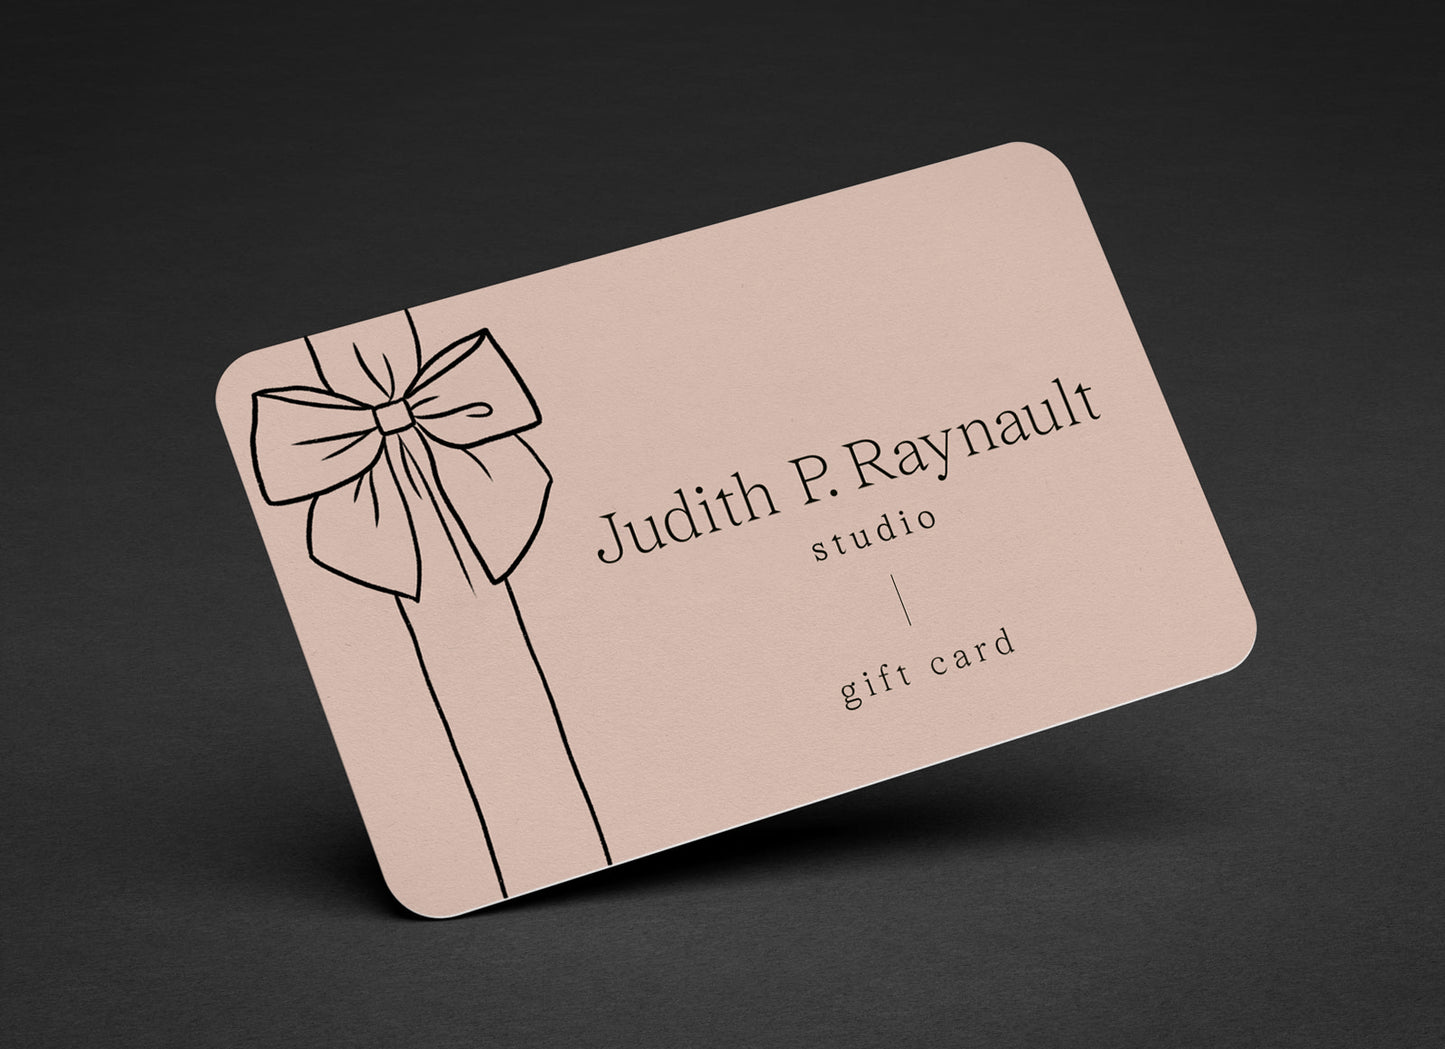 Judith P. Raynault Studio Gift Card